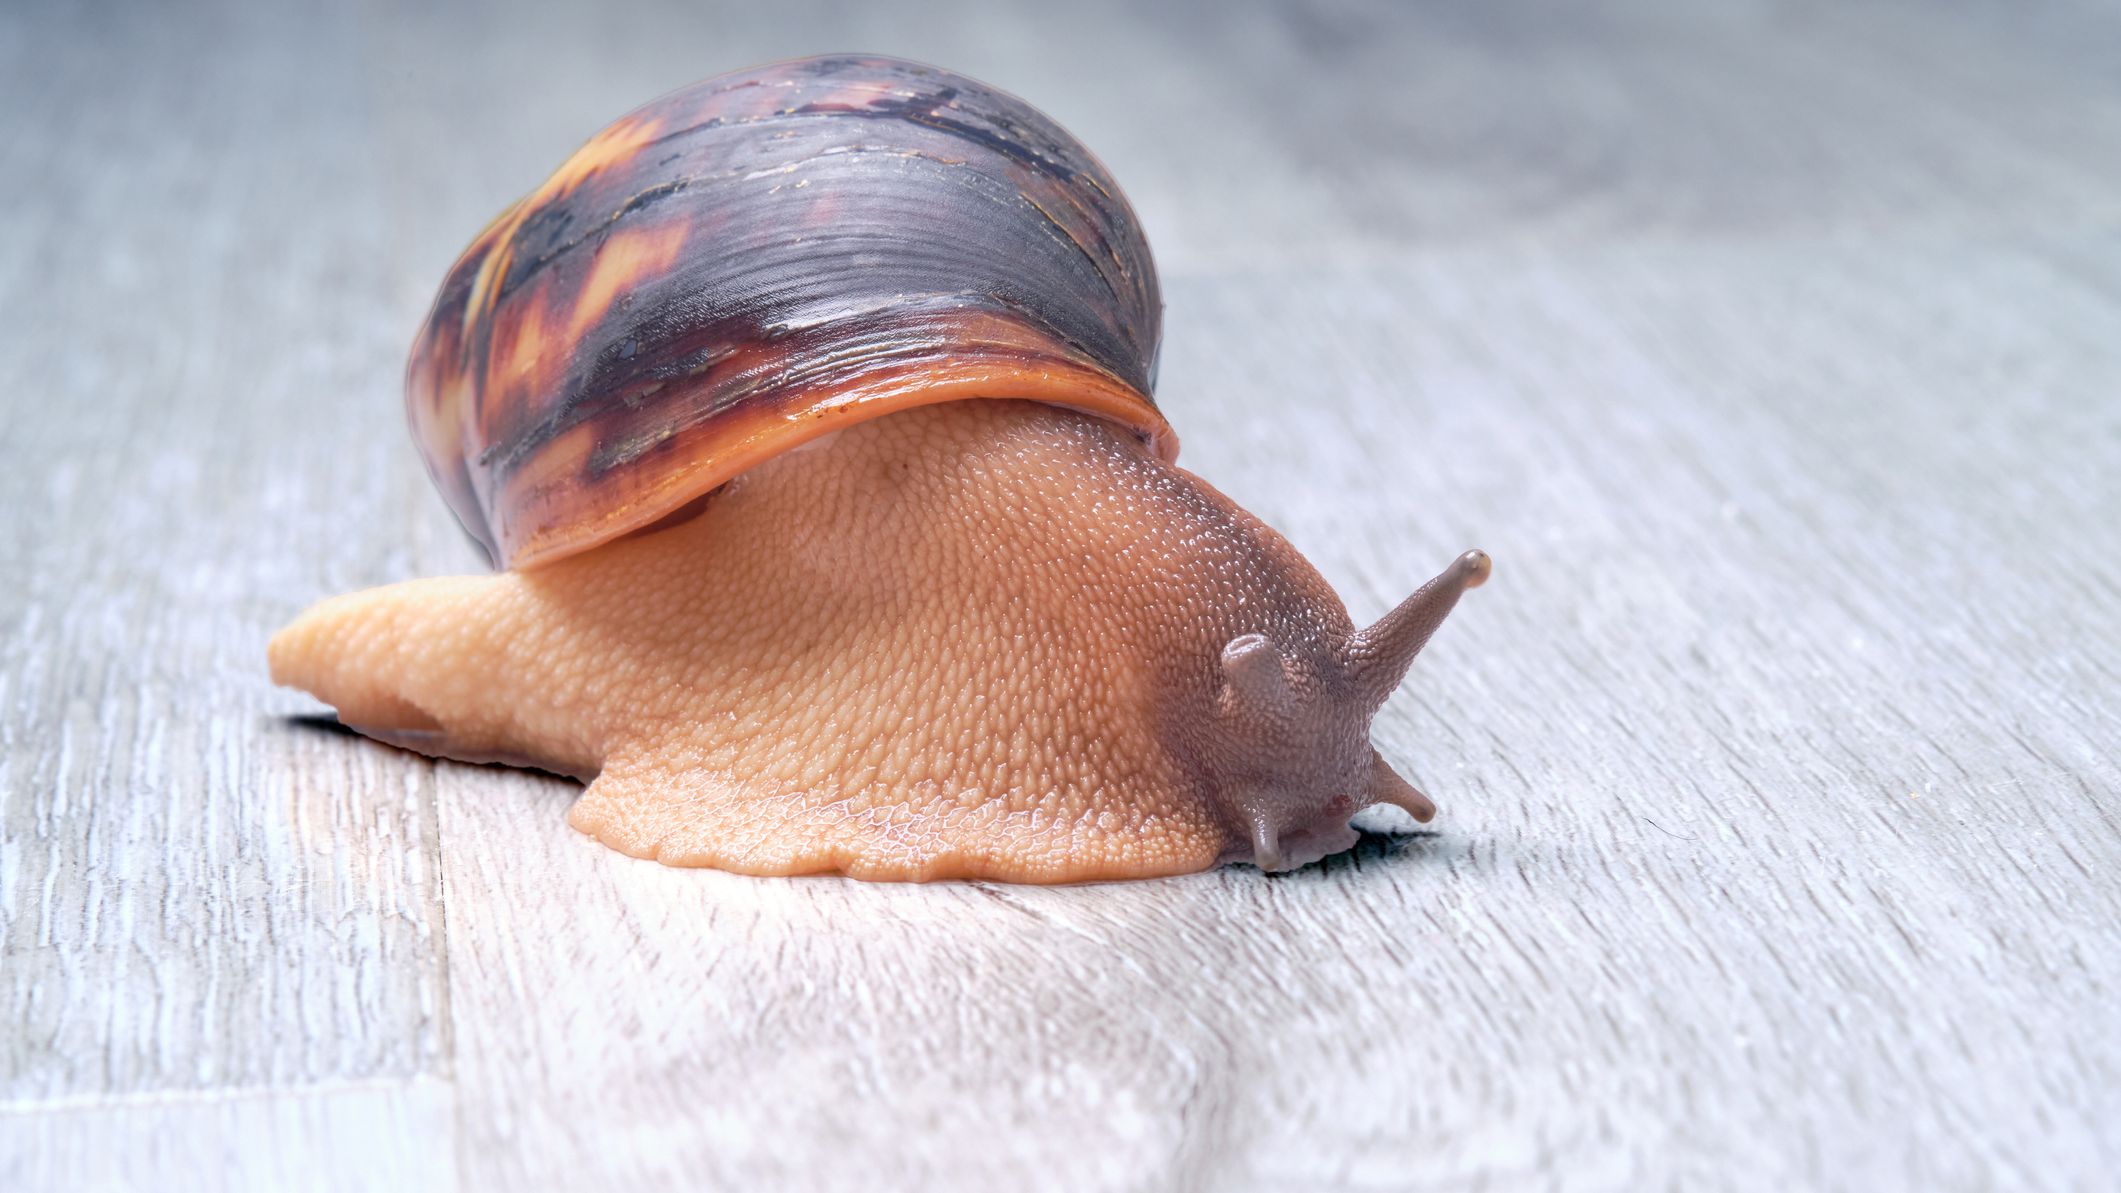 How do you make snails sleep?